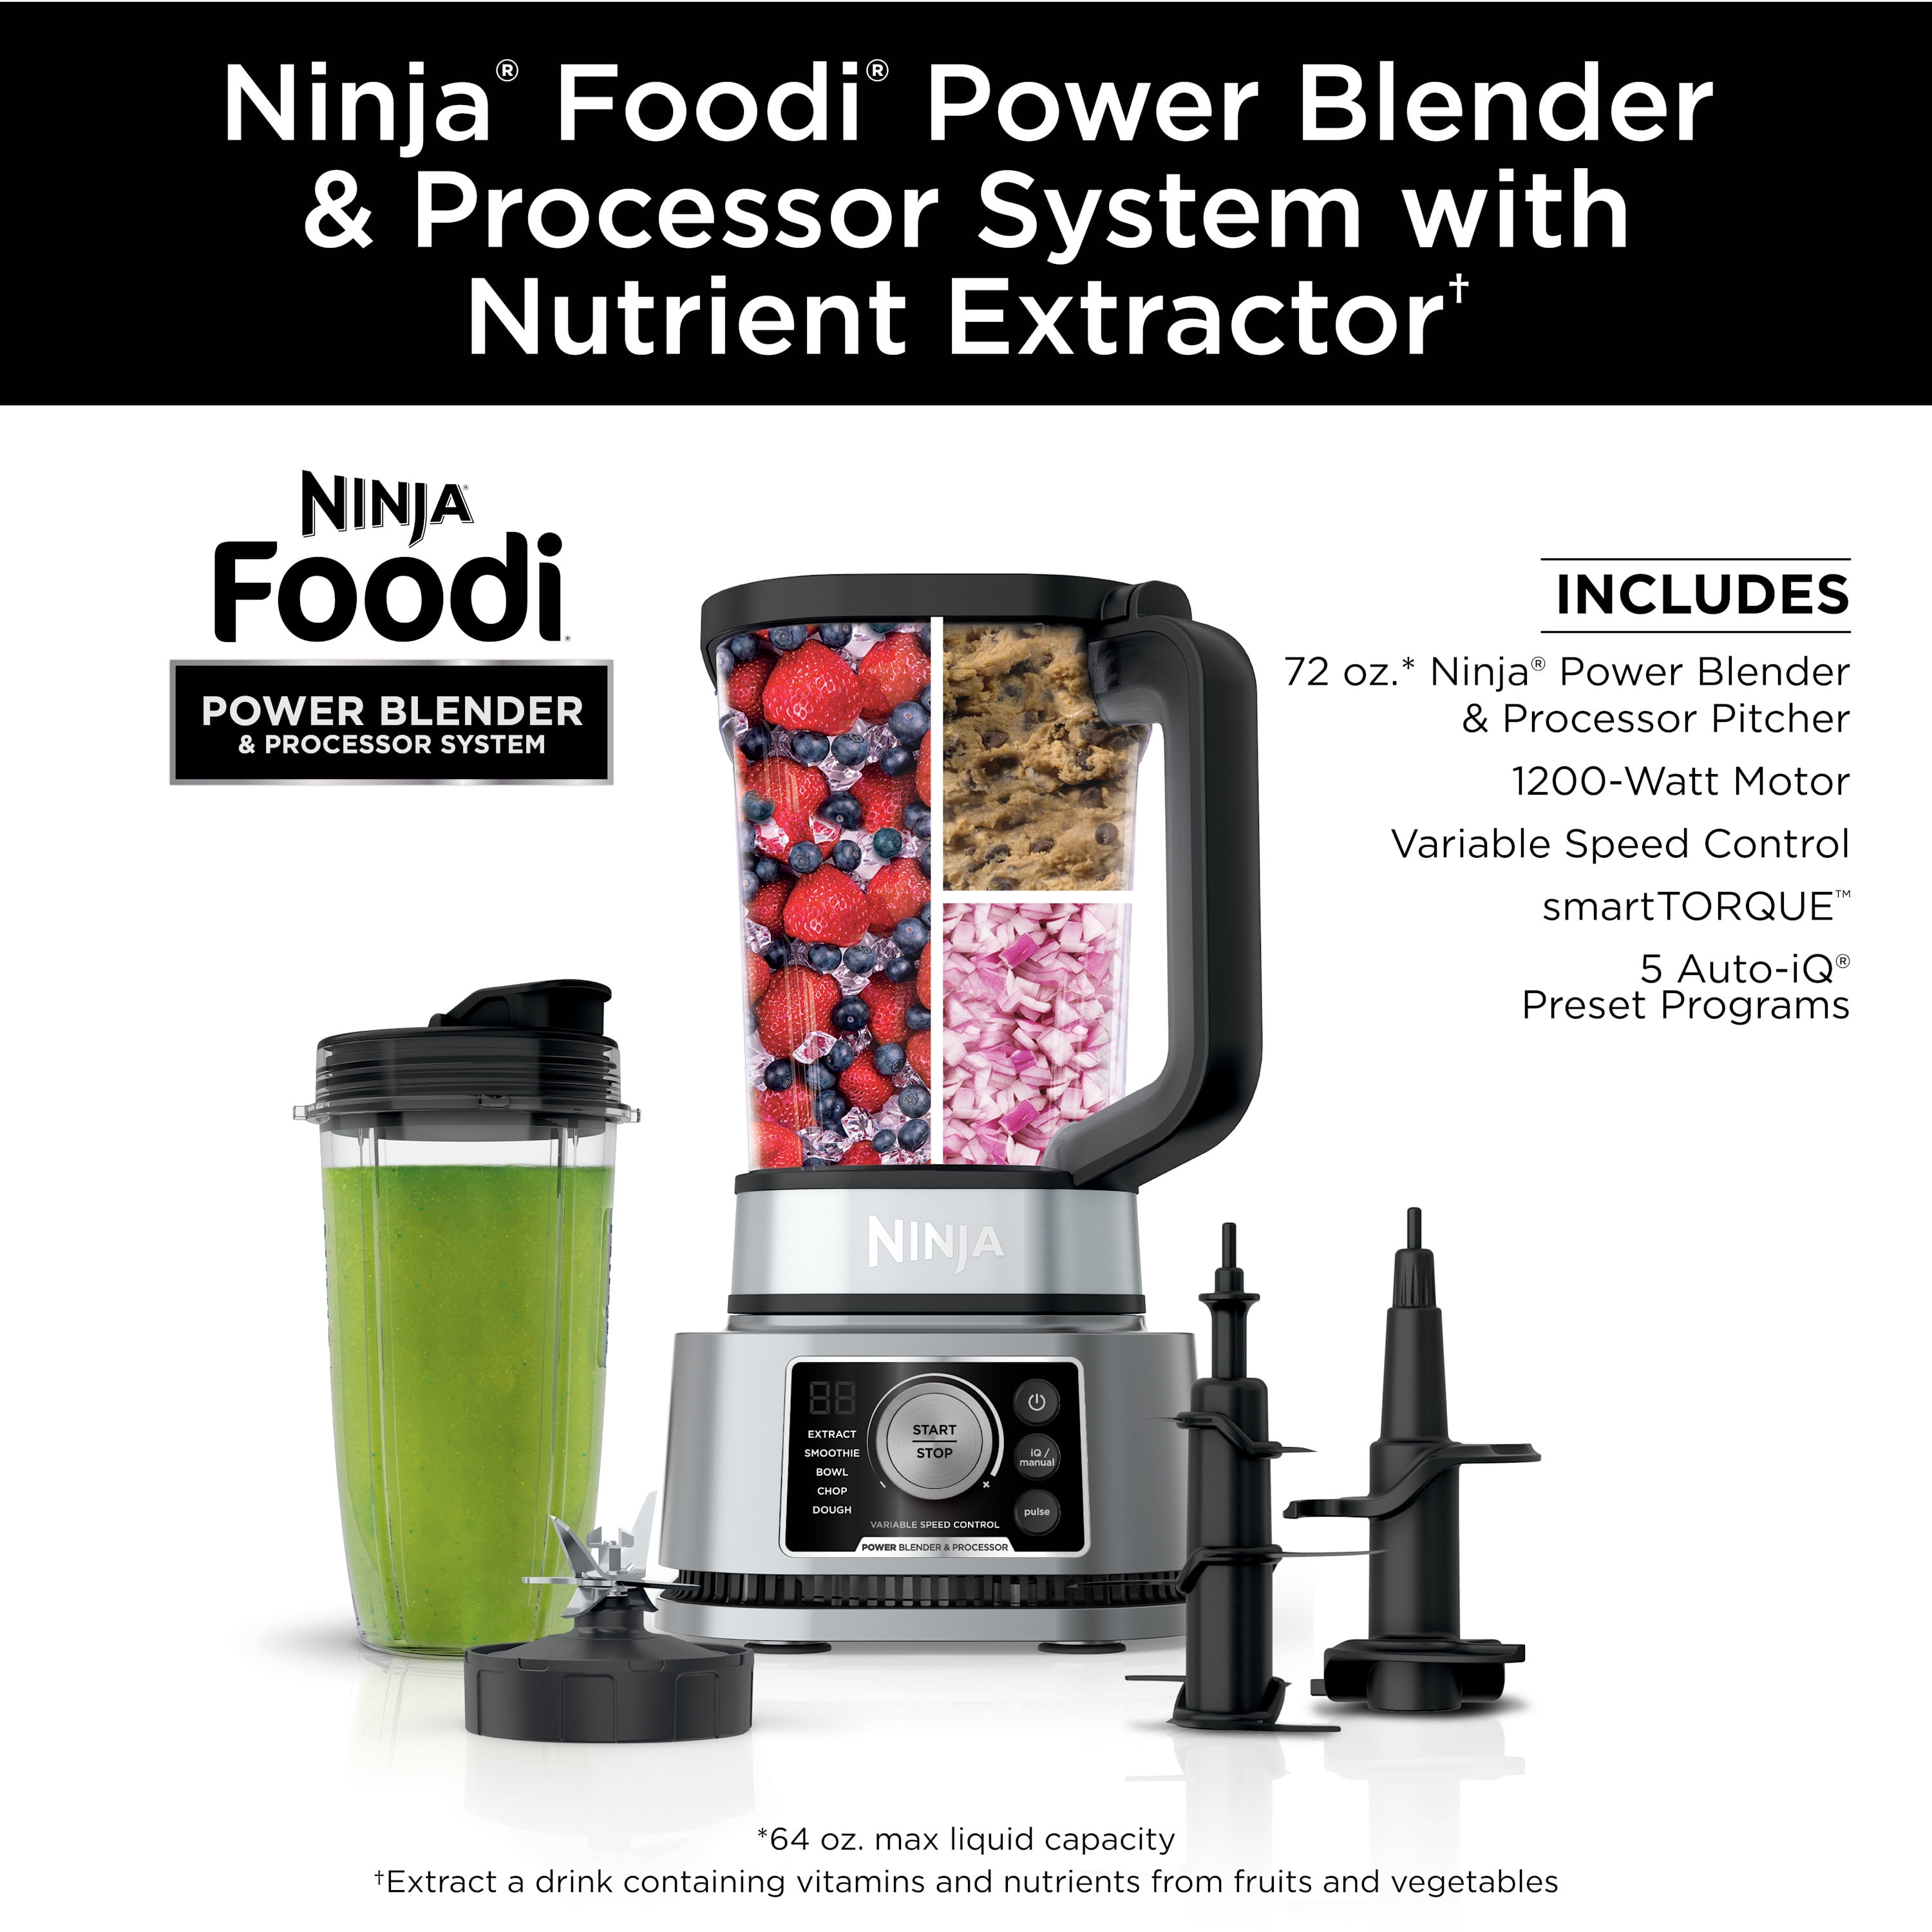 Ninja Foodi Power Blender and Processor System